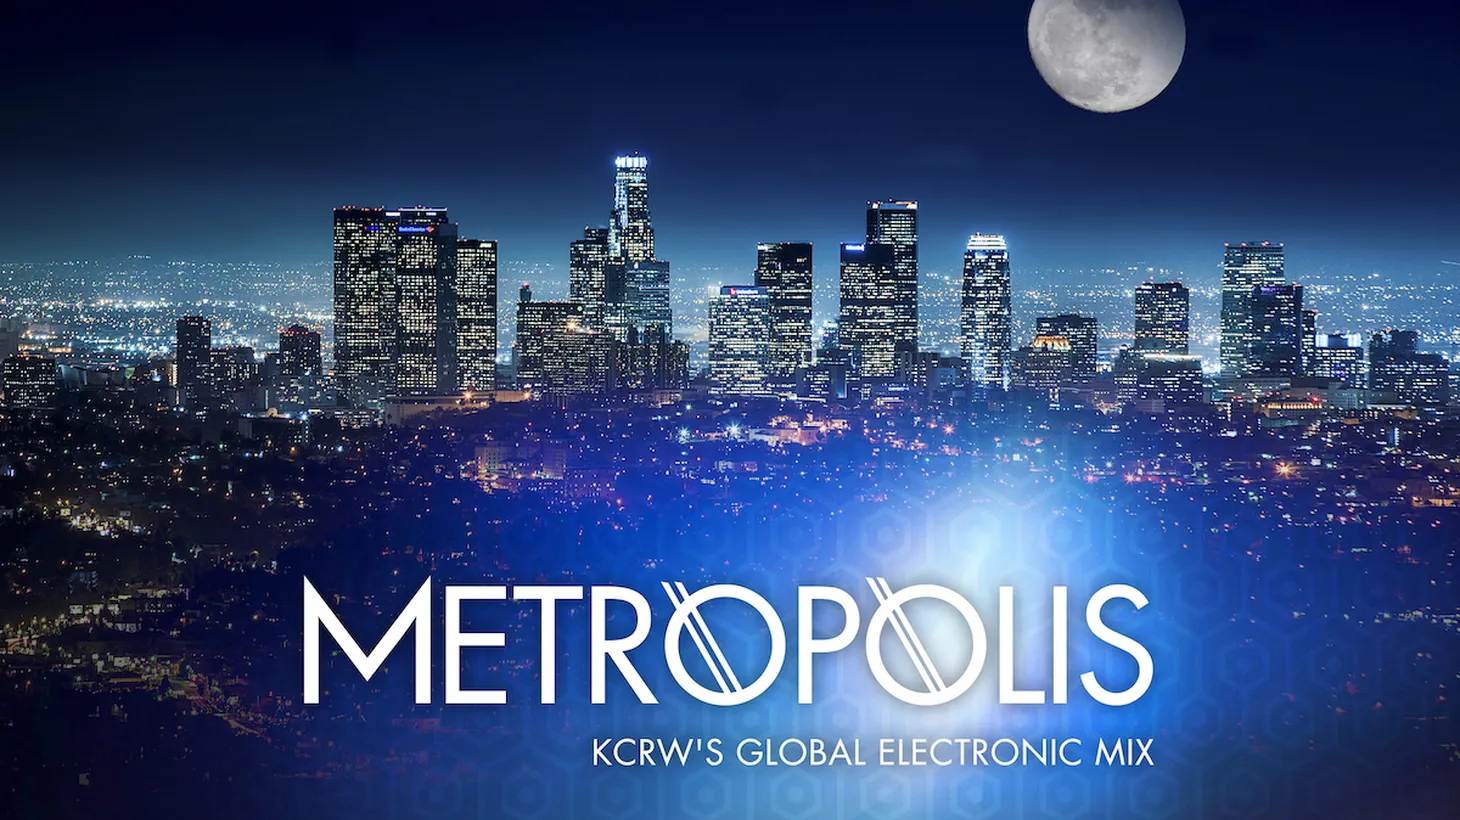 Metropolis playlist, August 13, 2022.